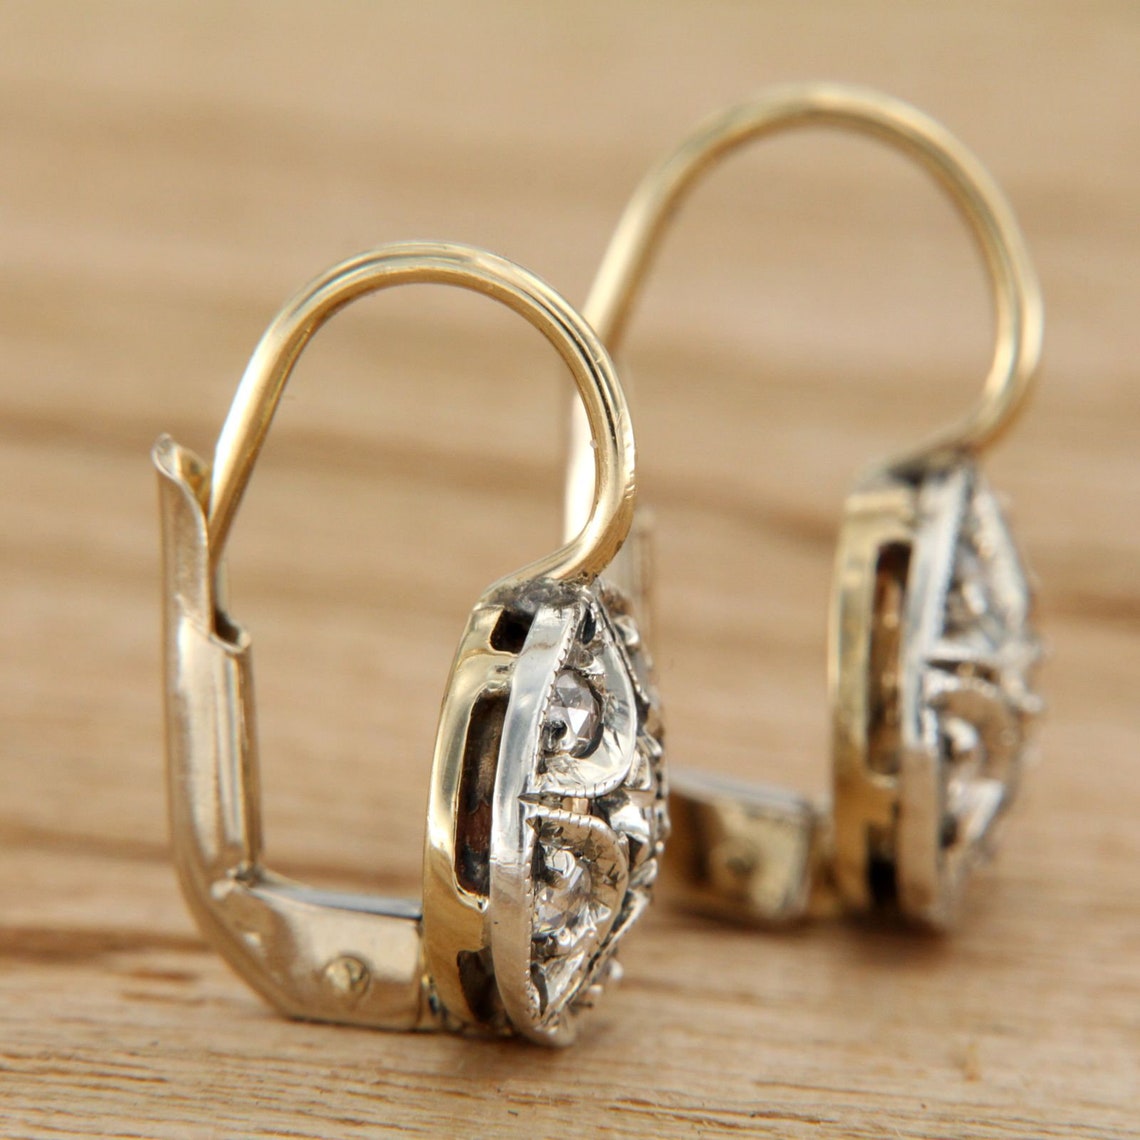 14 K Gold and Diamond Earrings Antique Style Earrings | Etsy